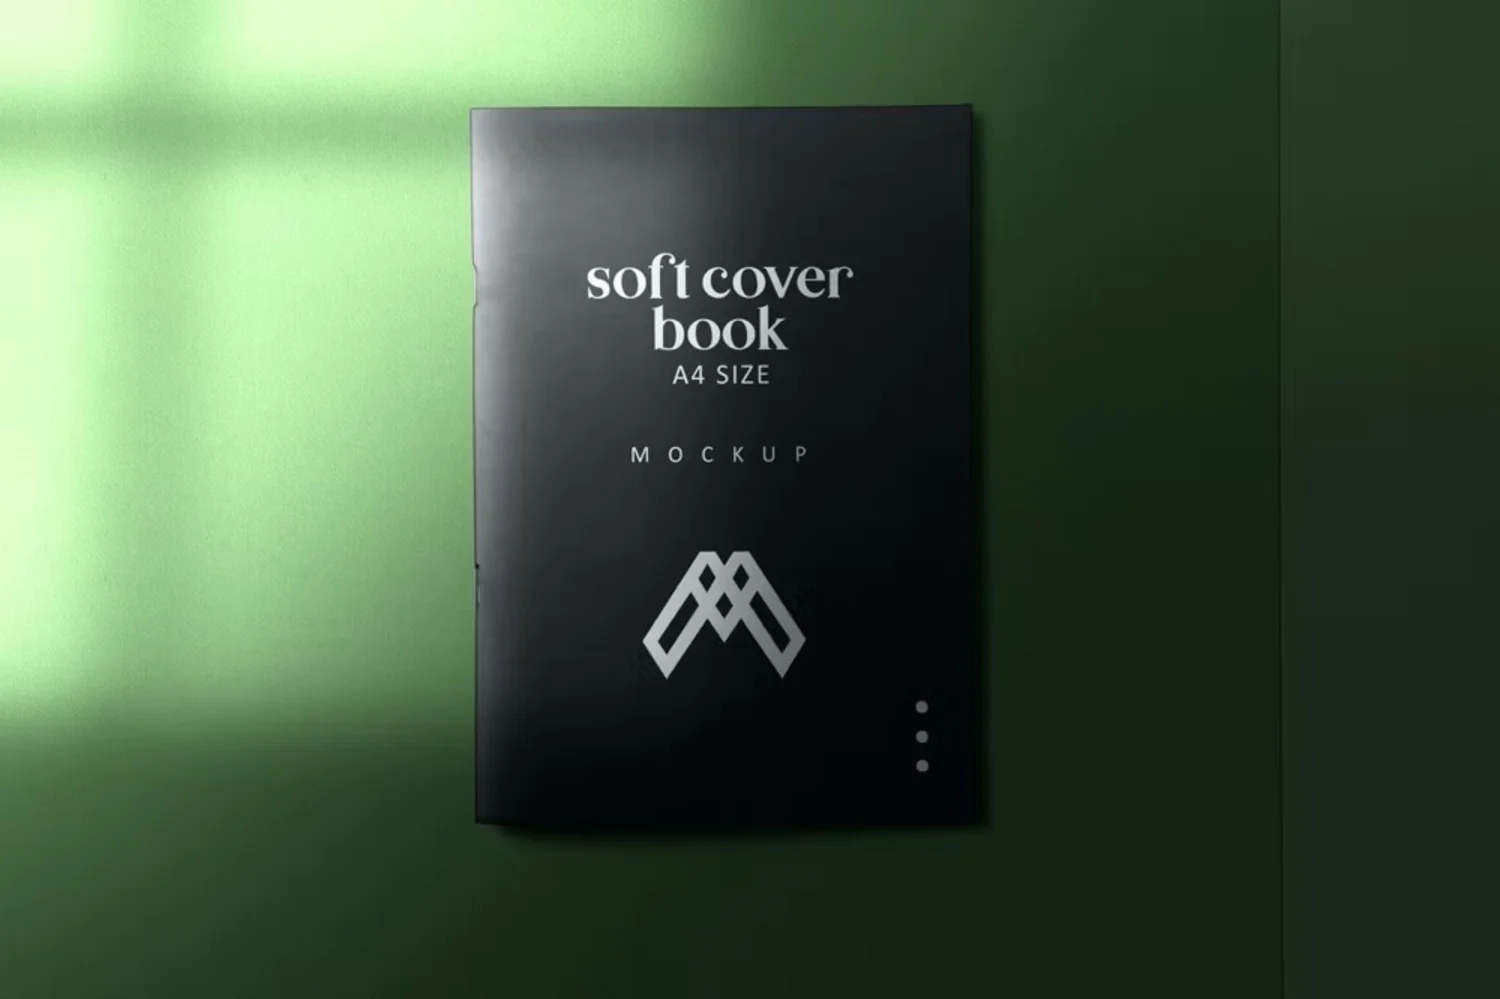 5074 软壳骑马钉书籍画册宣传册设计PS样机 A4 Soft Cover Book Mockups@GOOODME.COM